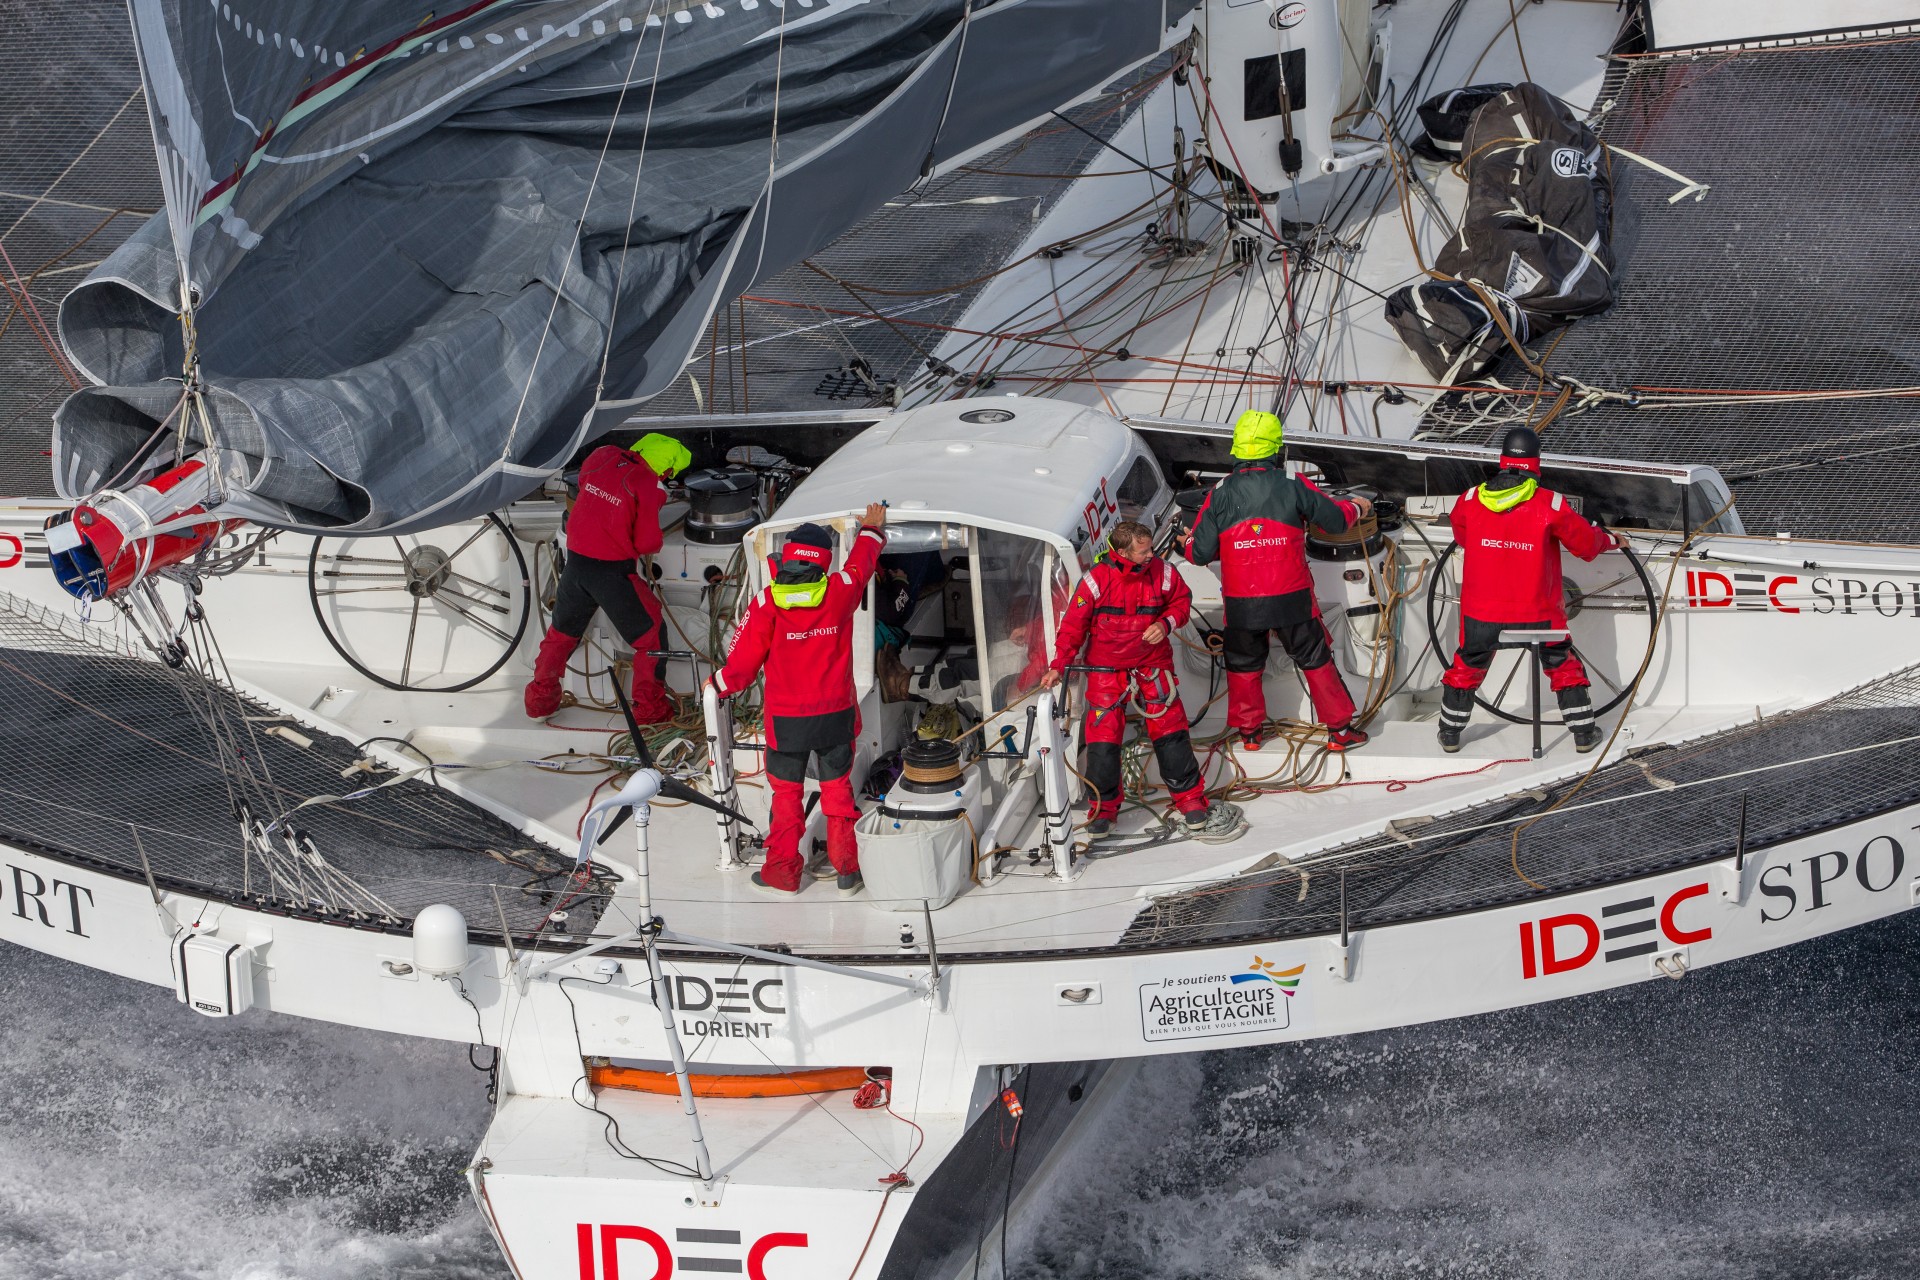  Trophee Jules Verne  Trimaran IDEC  Day 27  Rekord auch am Kap Horn !